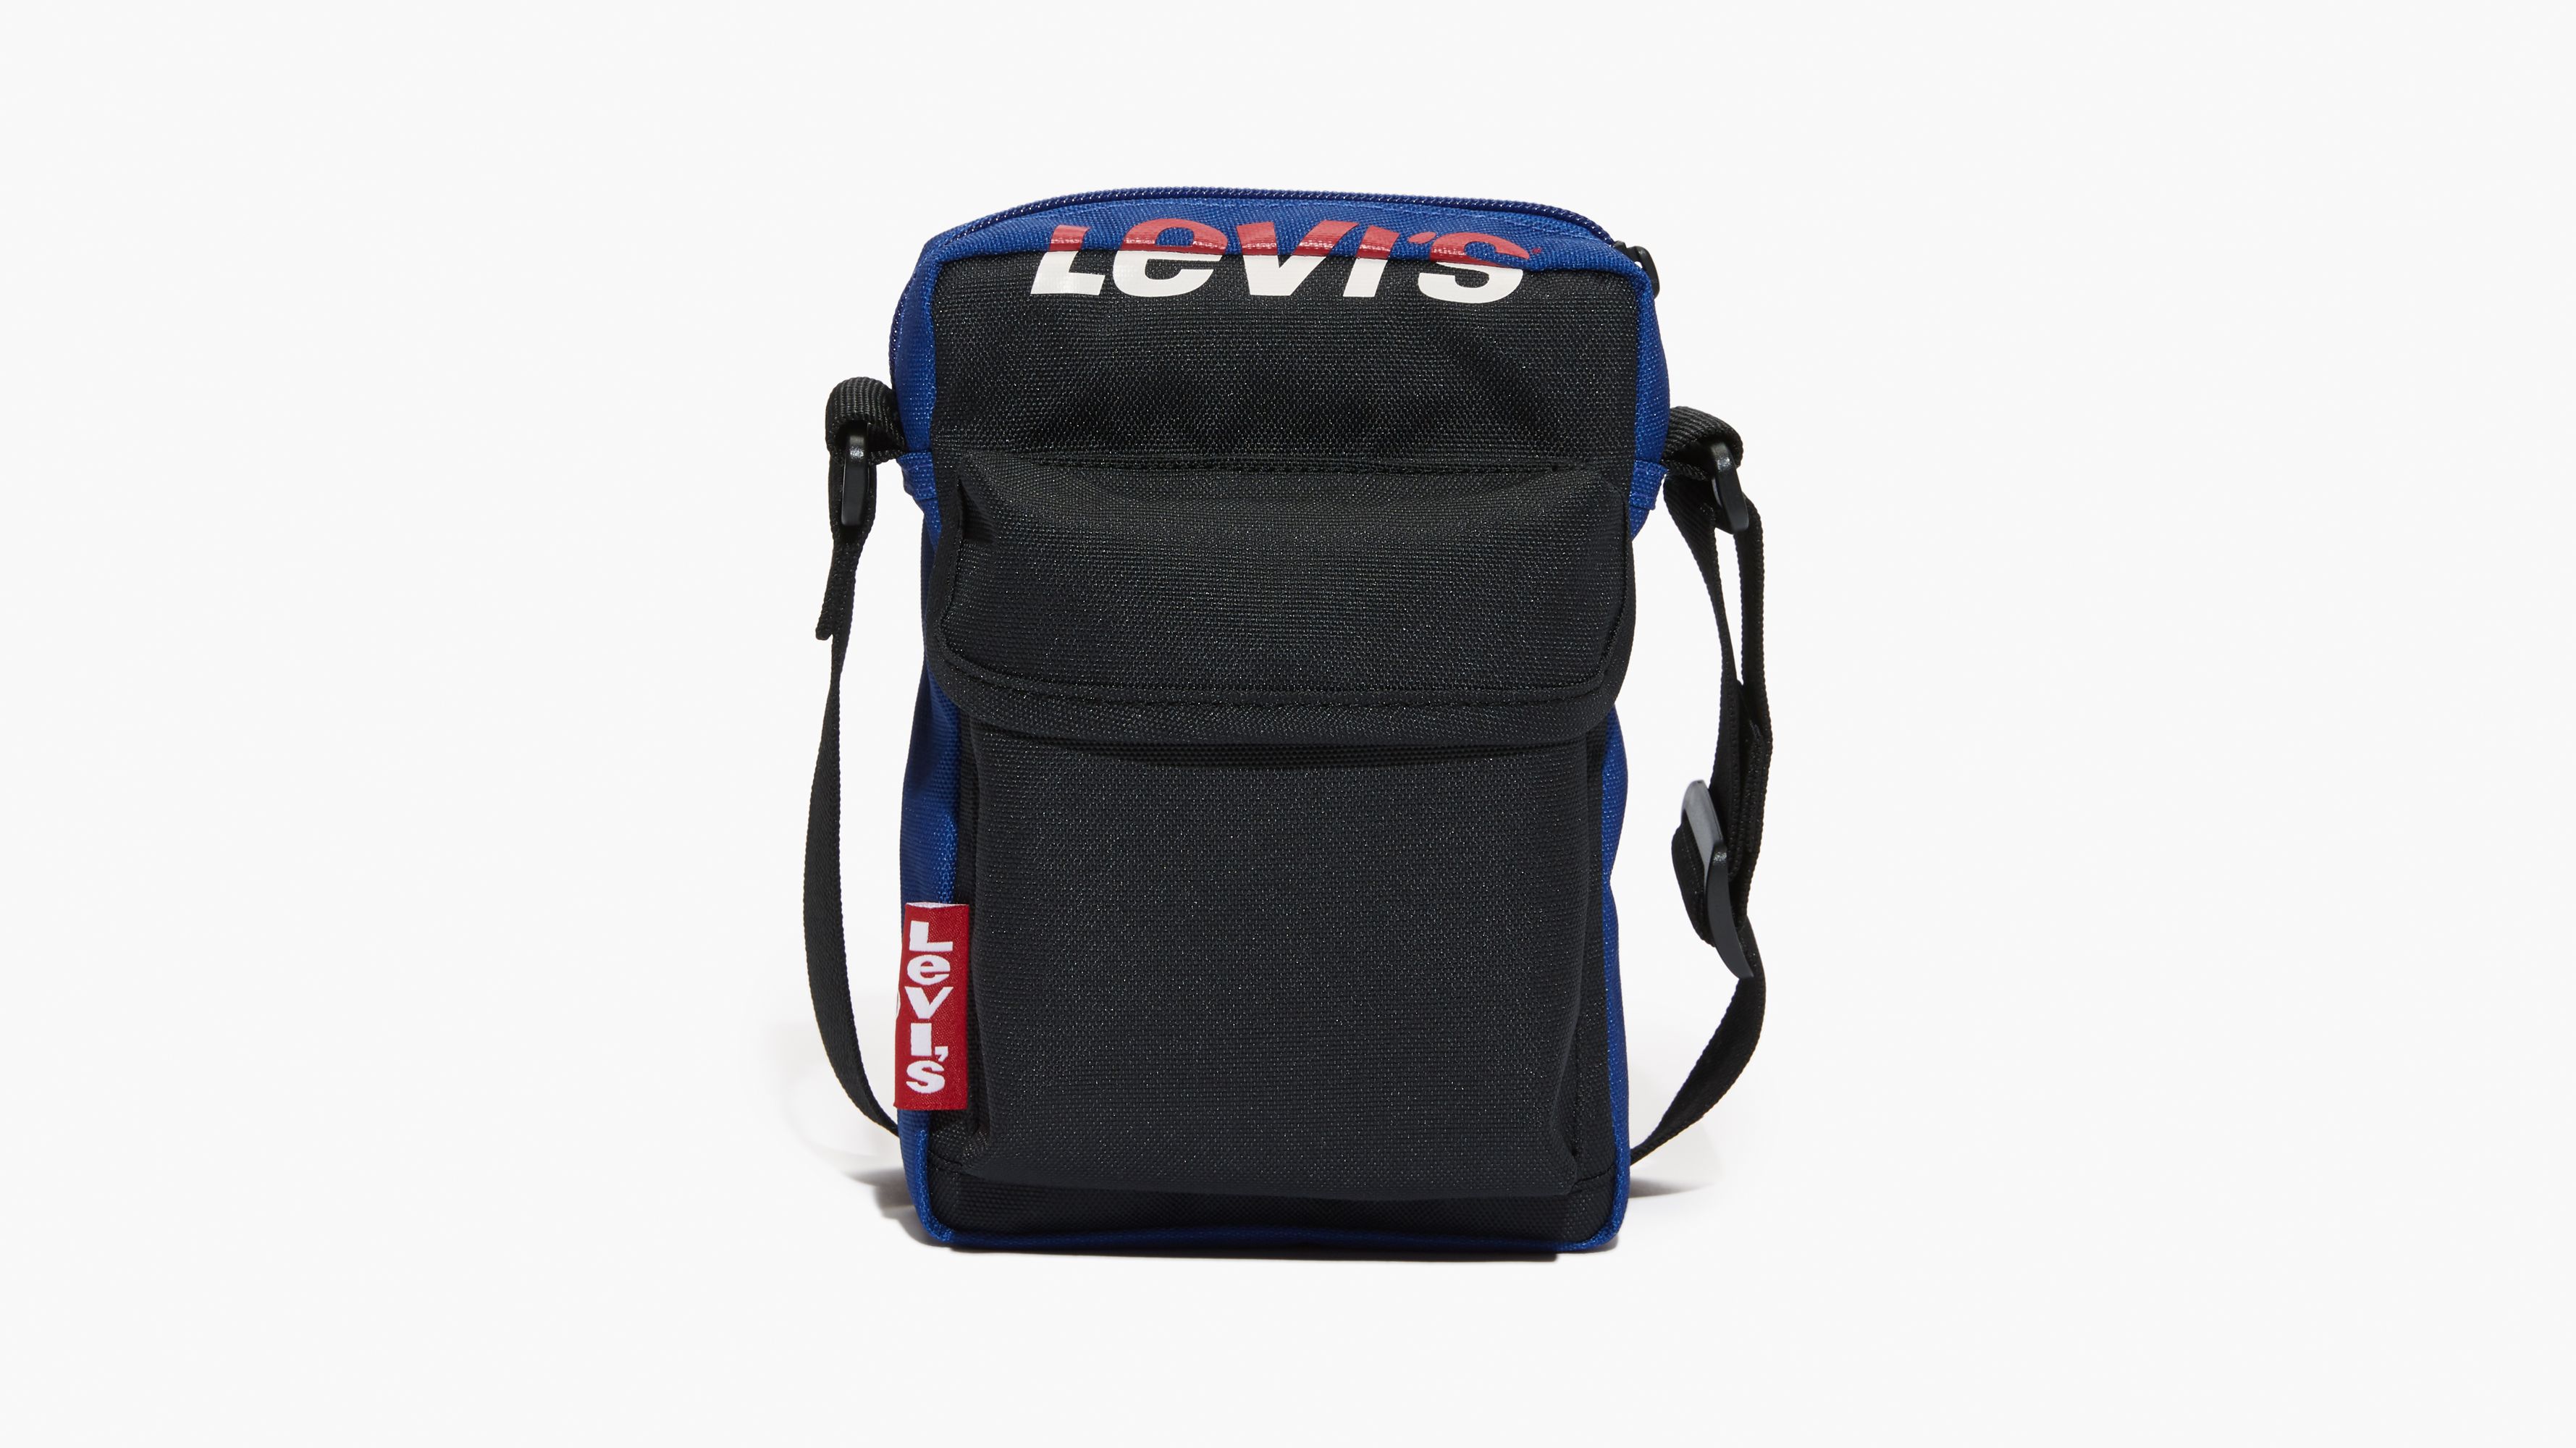 levis crossbody bag